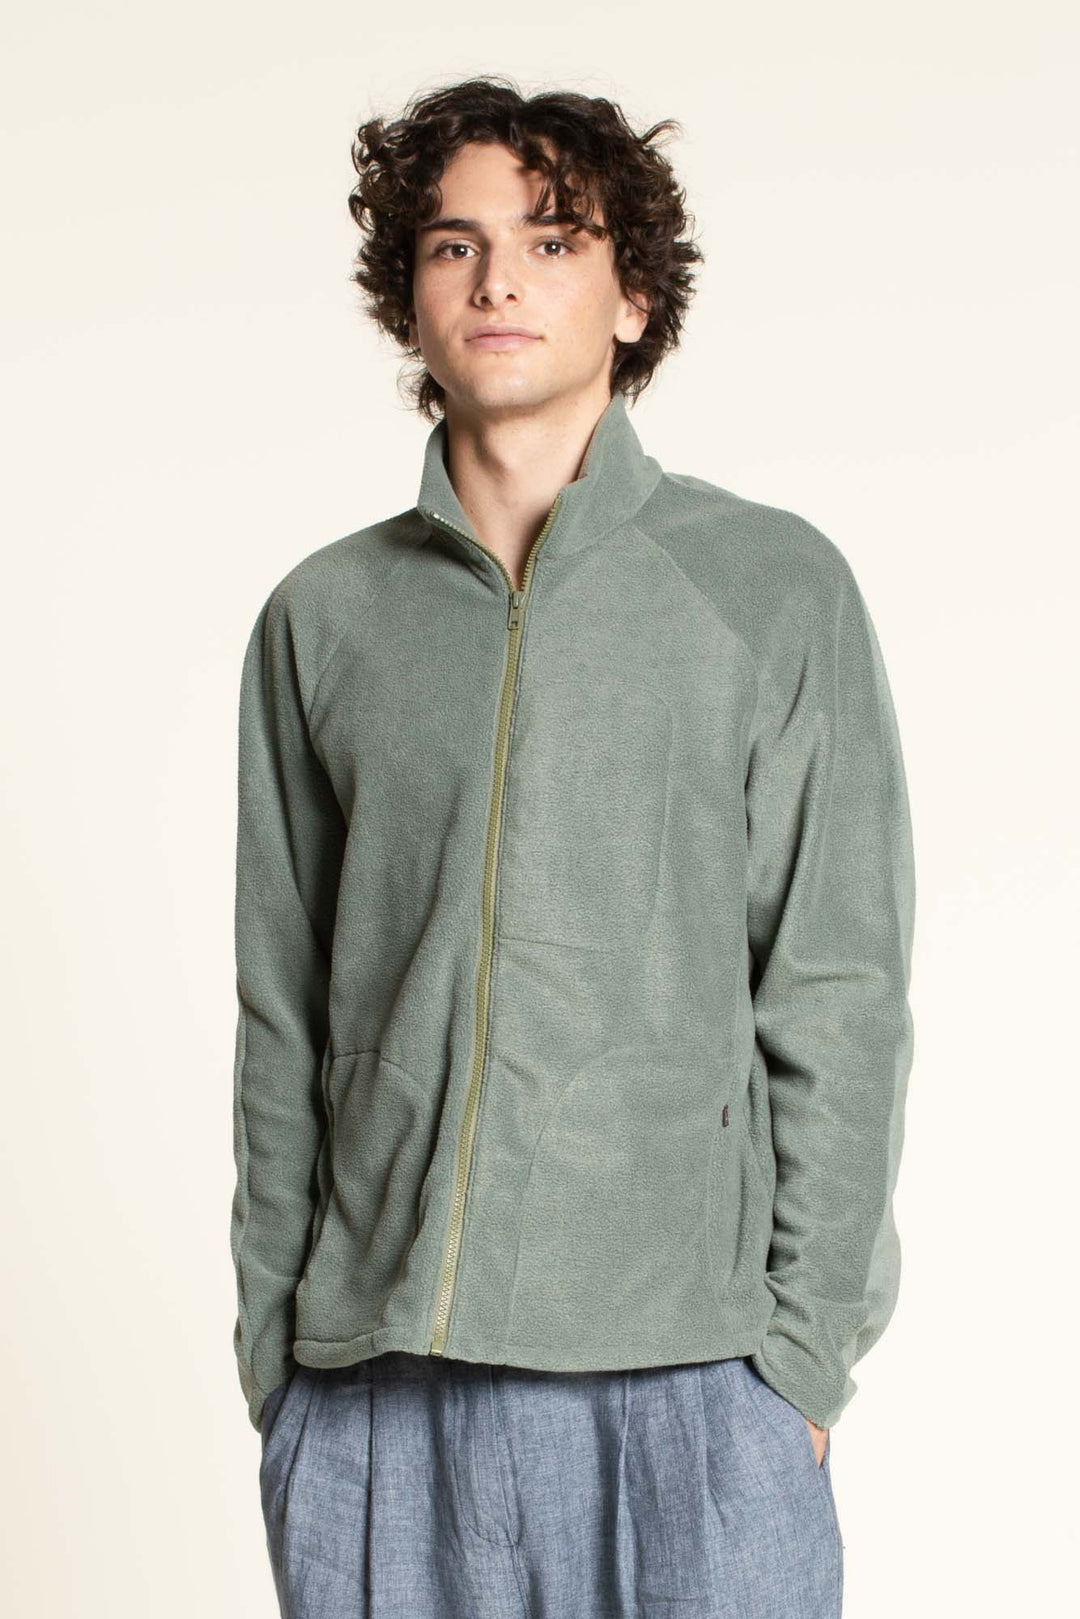 Fleece Jacket Printed pattern- Men's Sizes 2XS-4XL